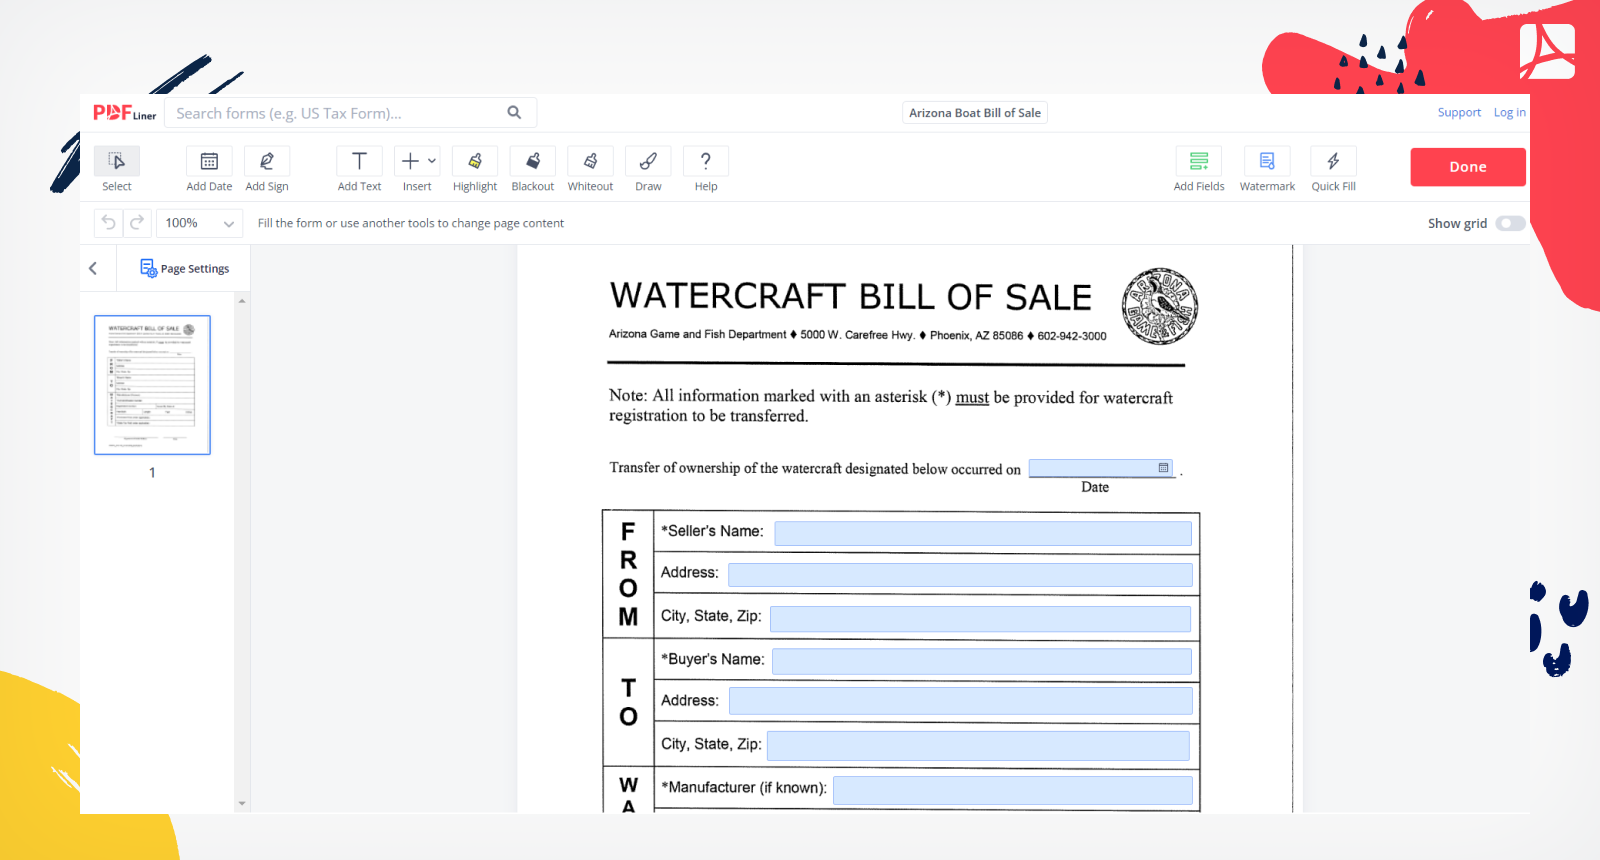 Arizona Boat Bill of Sale Form Screenshot